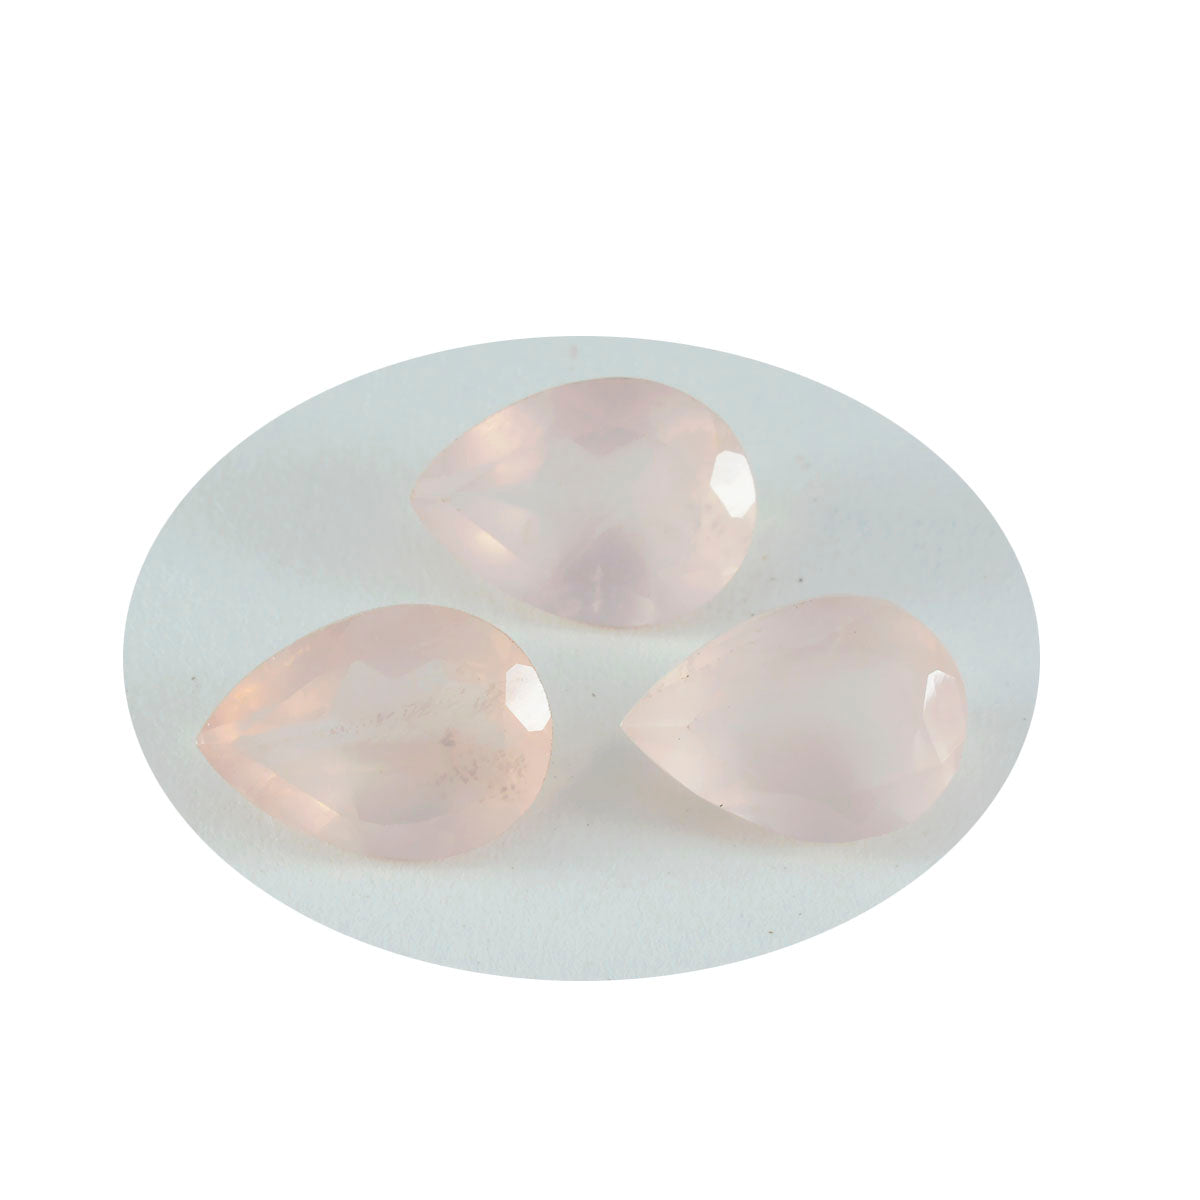 Riyogems 1PC Pink Rose Quartz Faceted 10x14 mm Pear Shape cute Quality Loose Stone